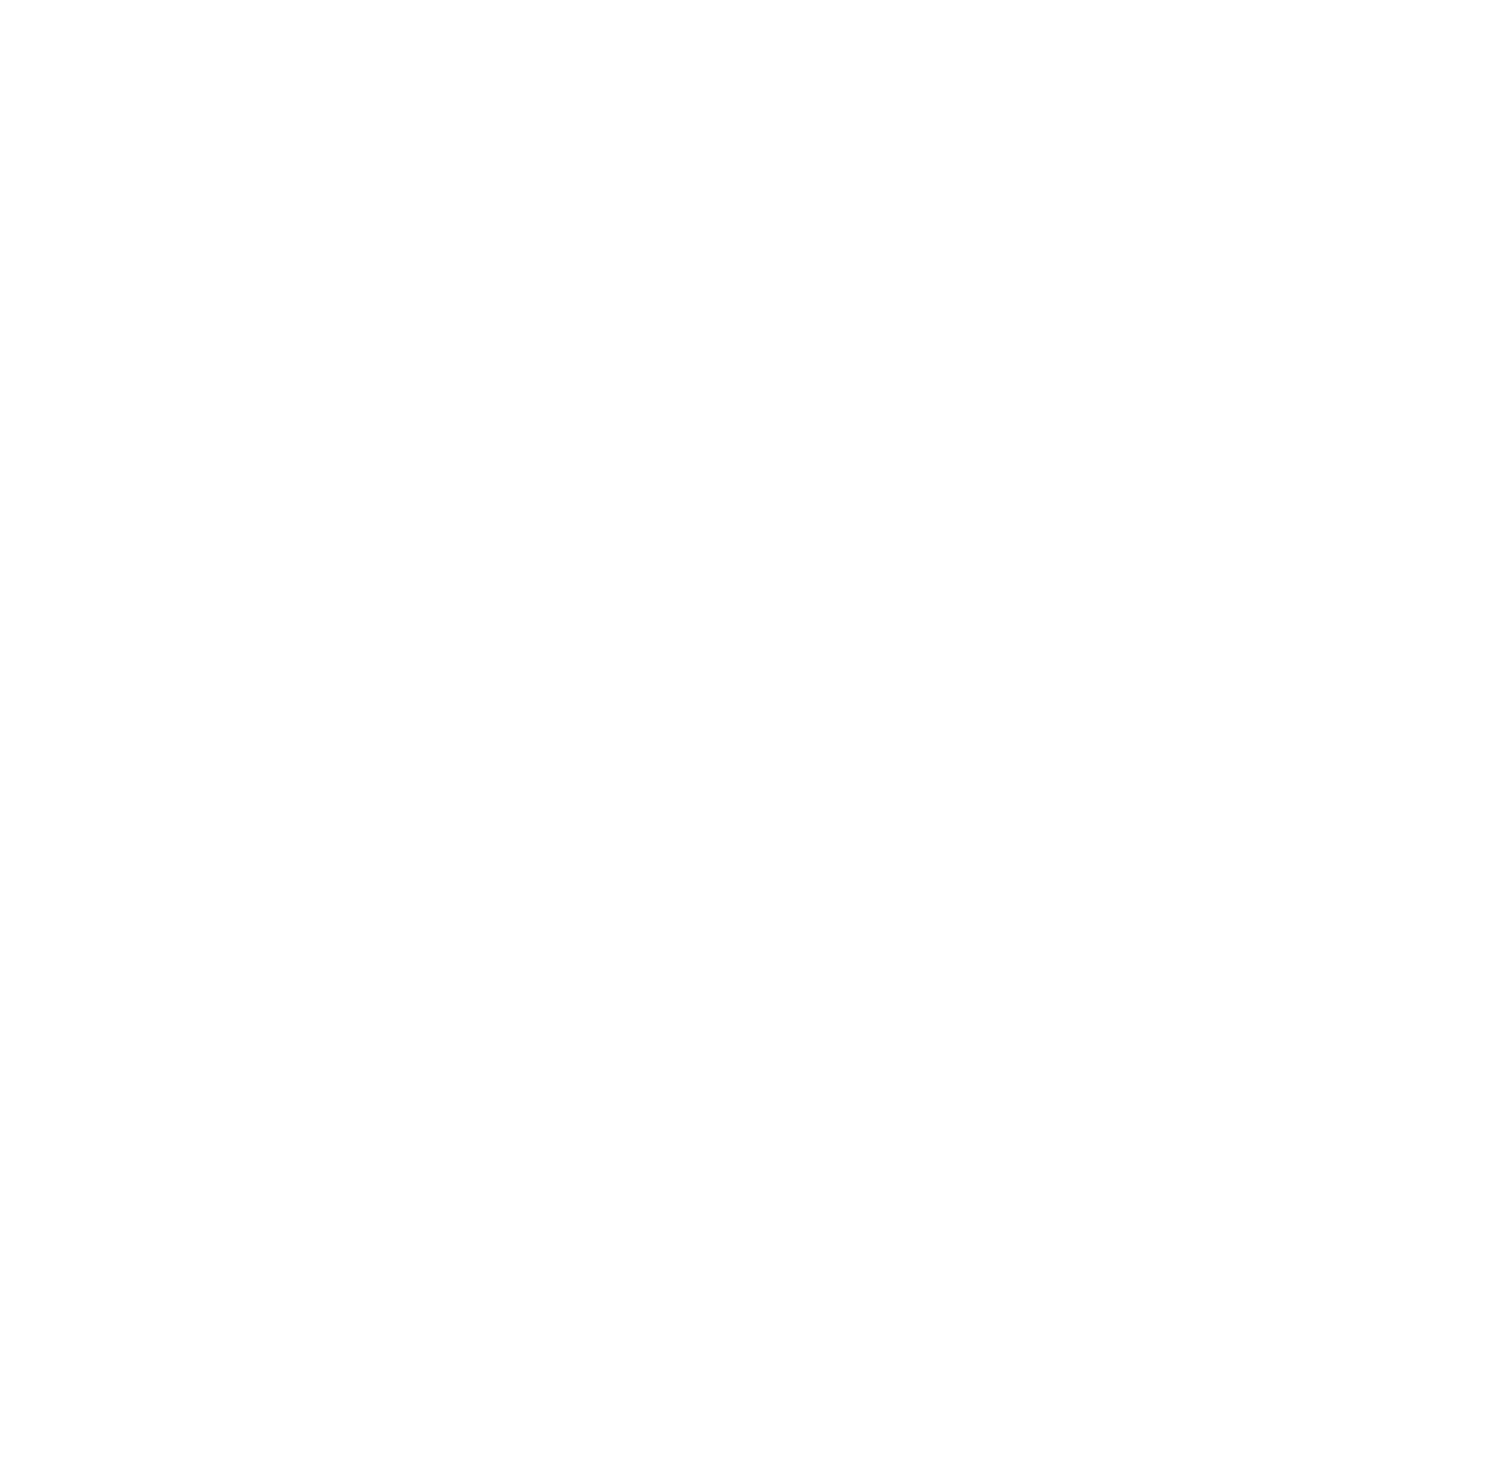 Erlebacher Lab